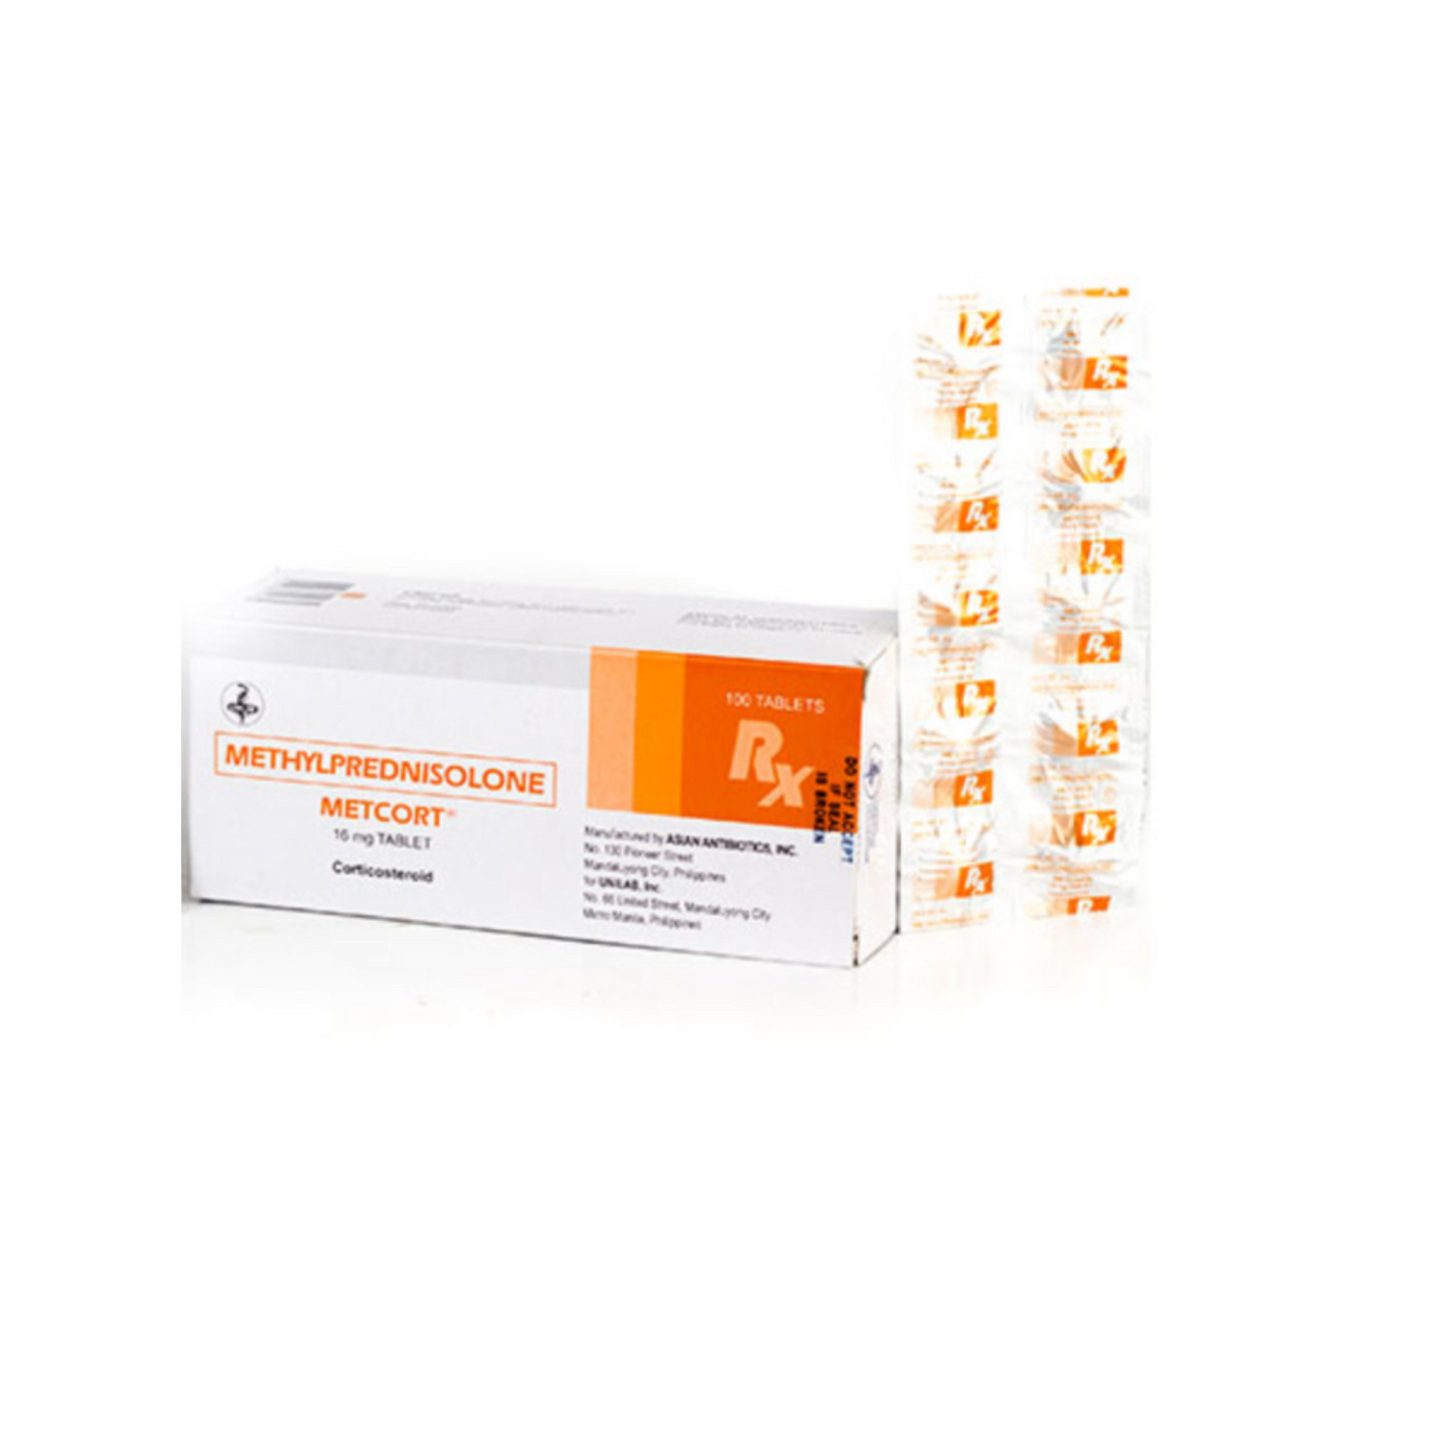 METCORT Methylprednisolone 16mg Tablet x 1